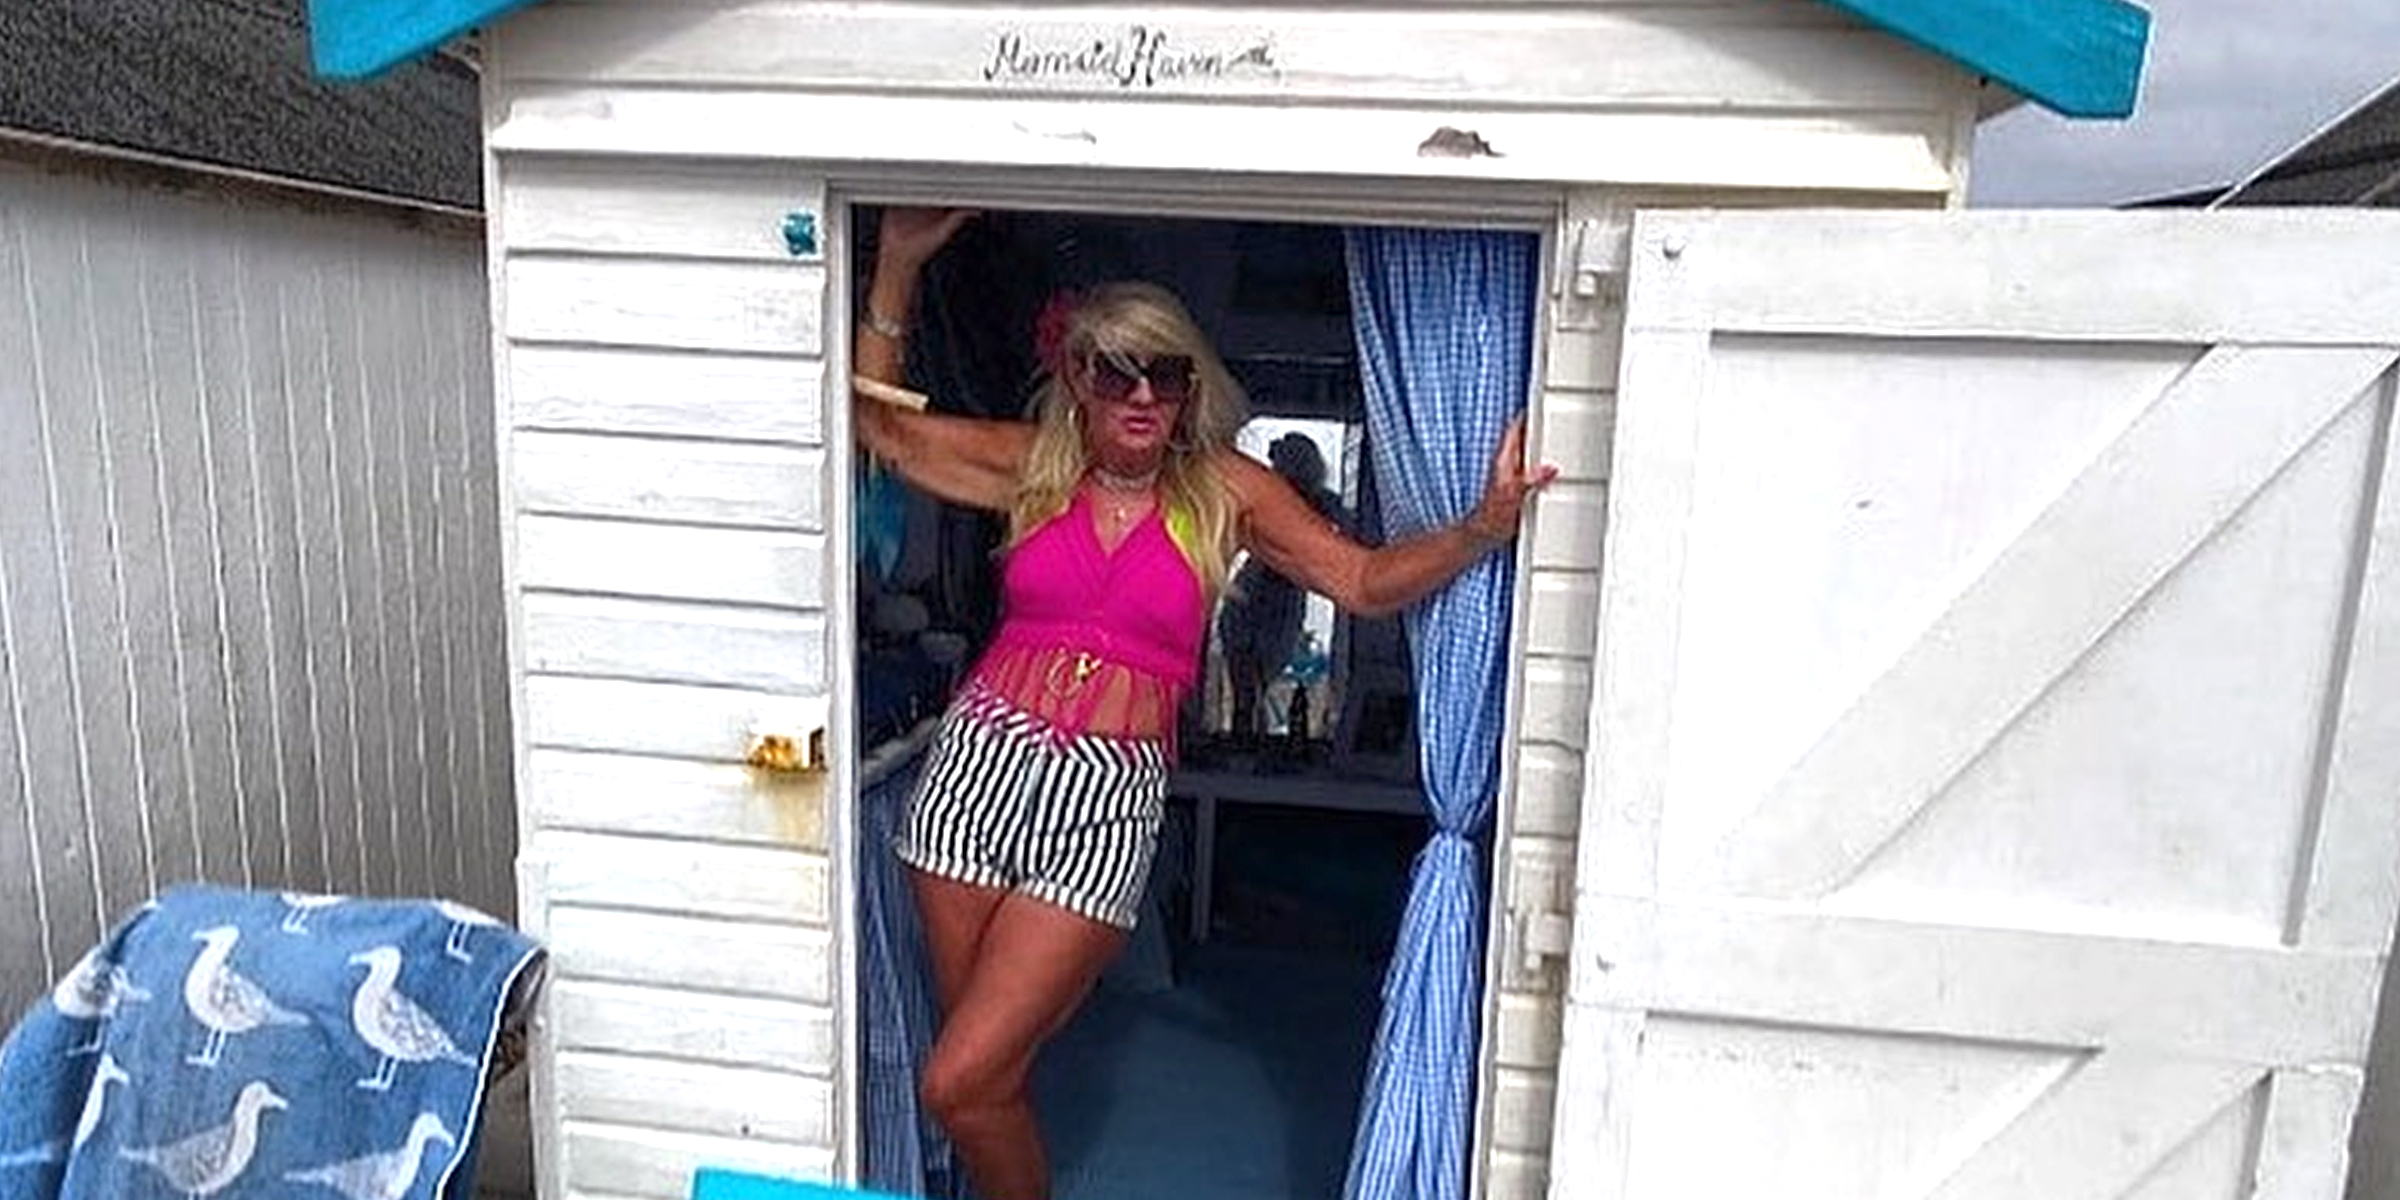 Michele Spicer dans sa cabine de plage | Source : Instagram.com/michelespicer2022